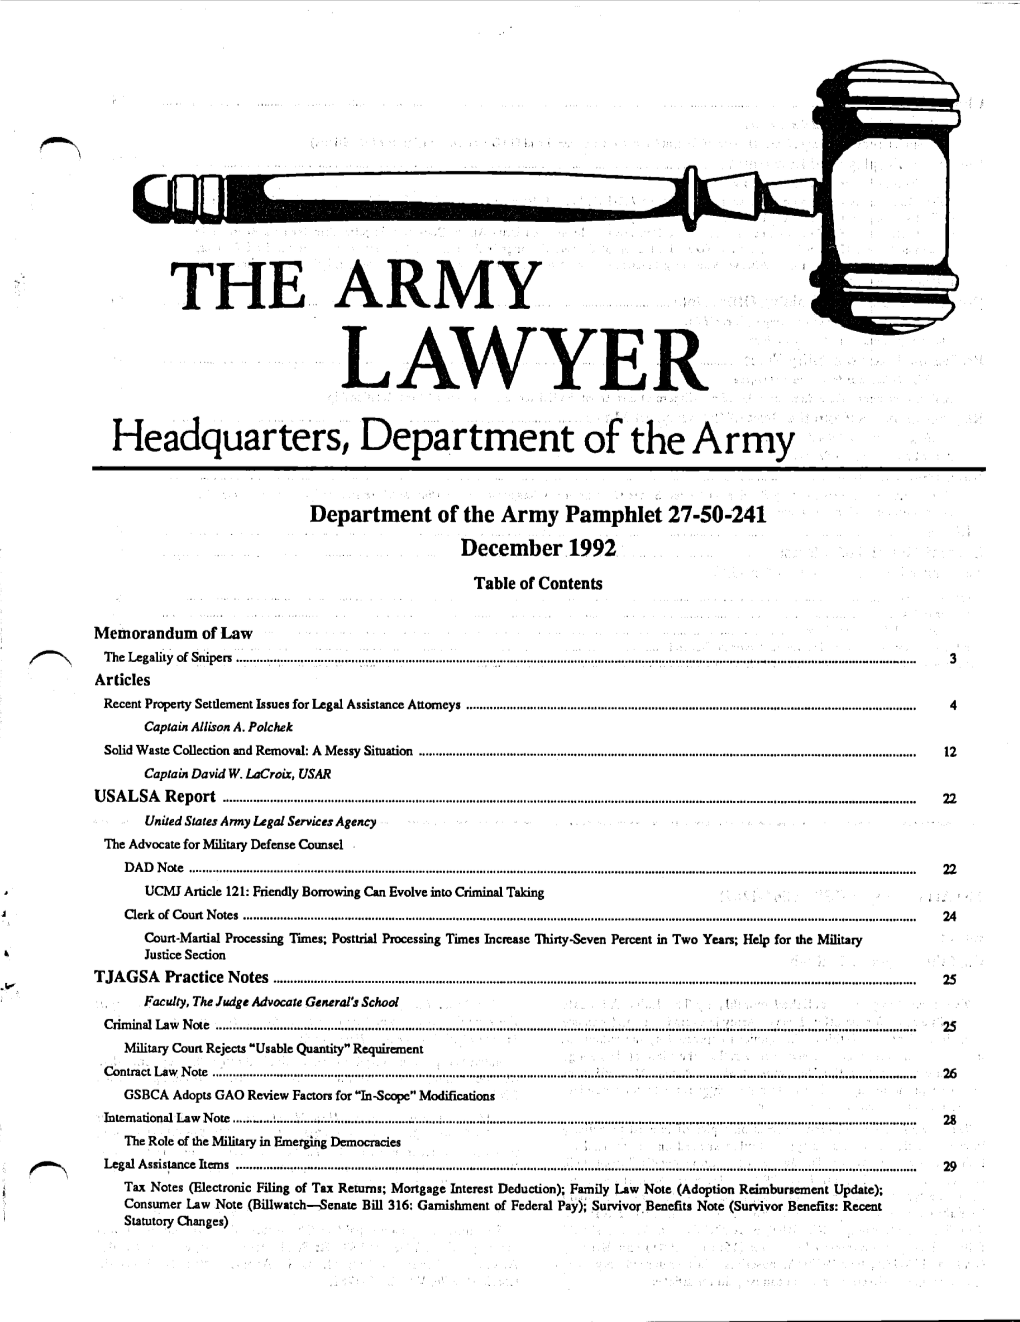 The Army Lawyer (Dec